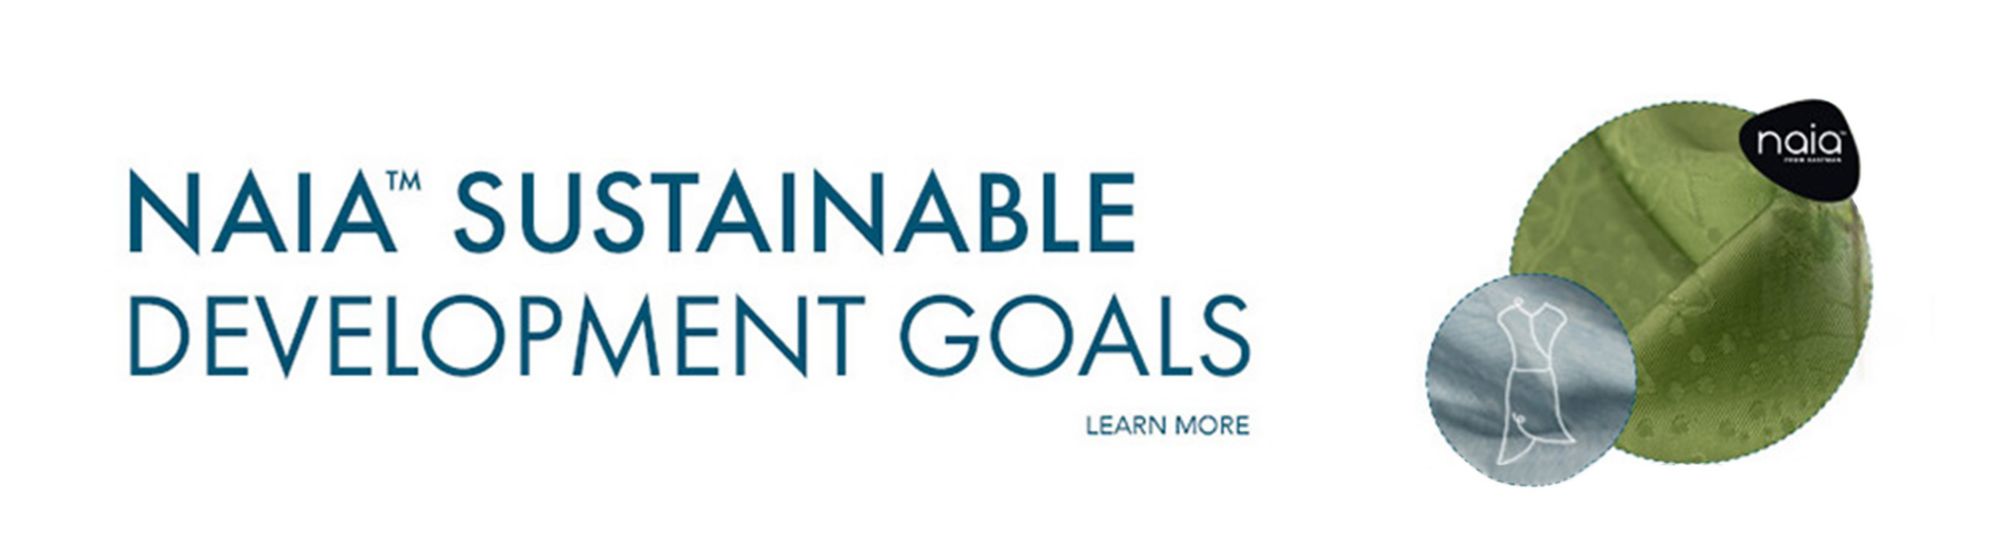 Naia Sustainability Goals 